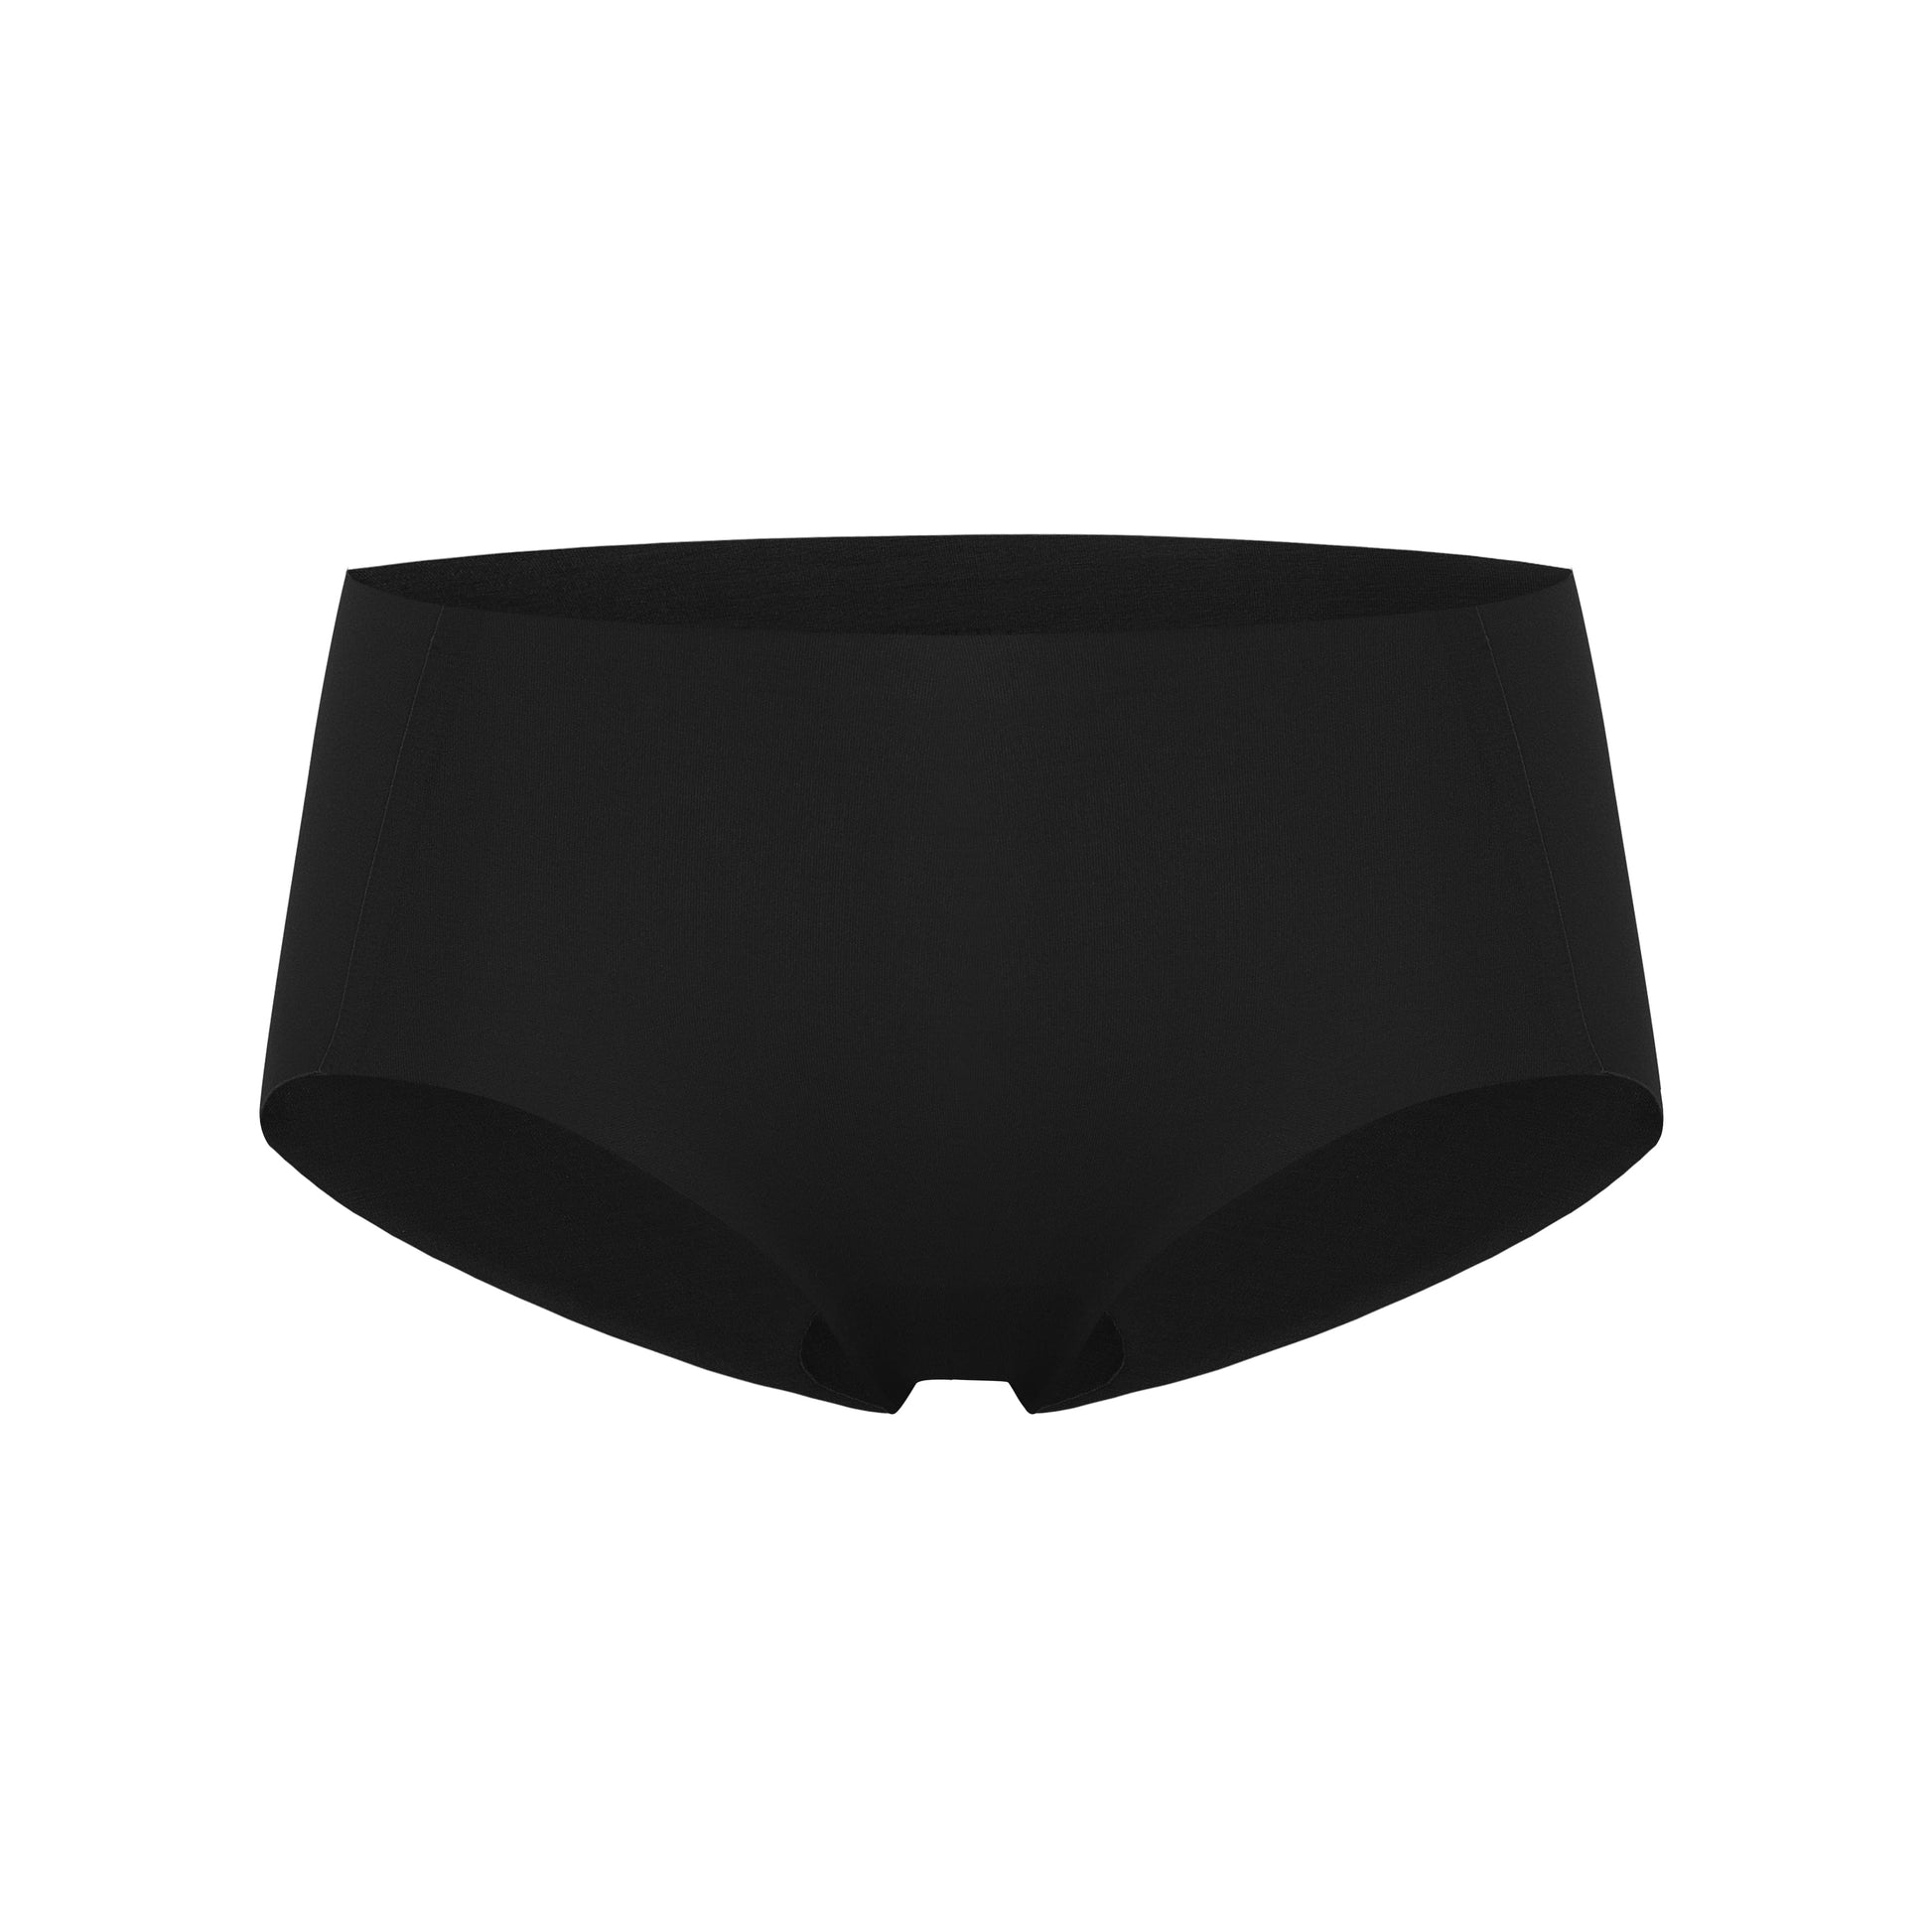 Flat lay image of black underwear